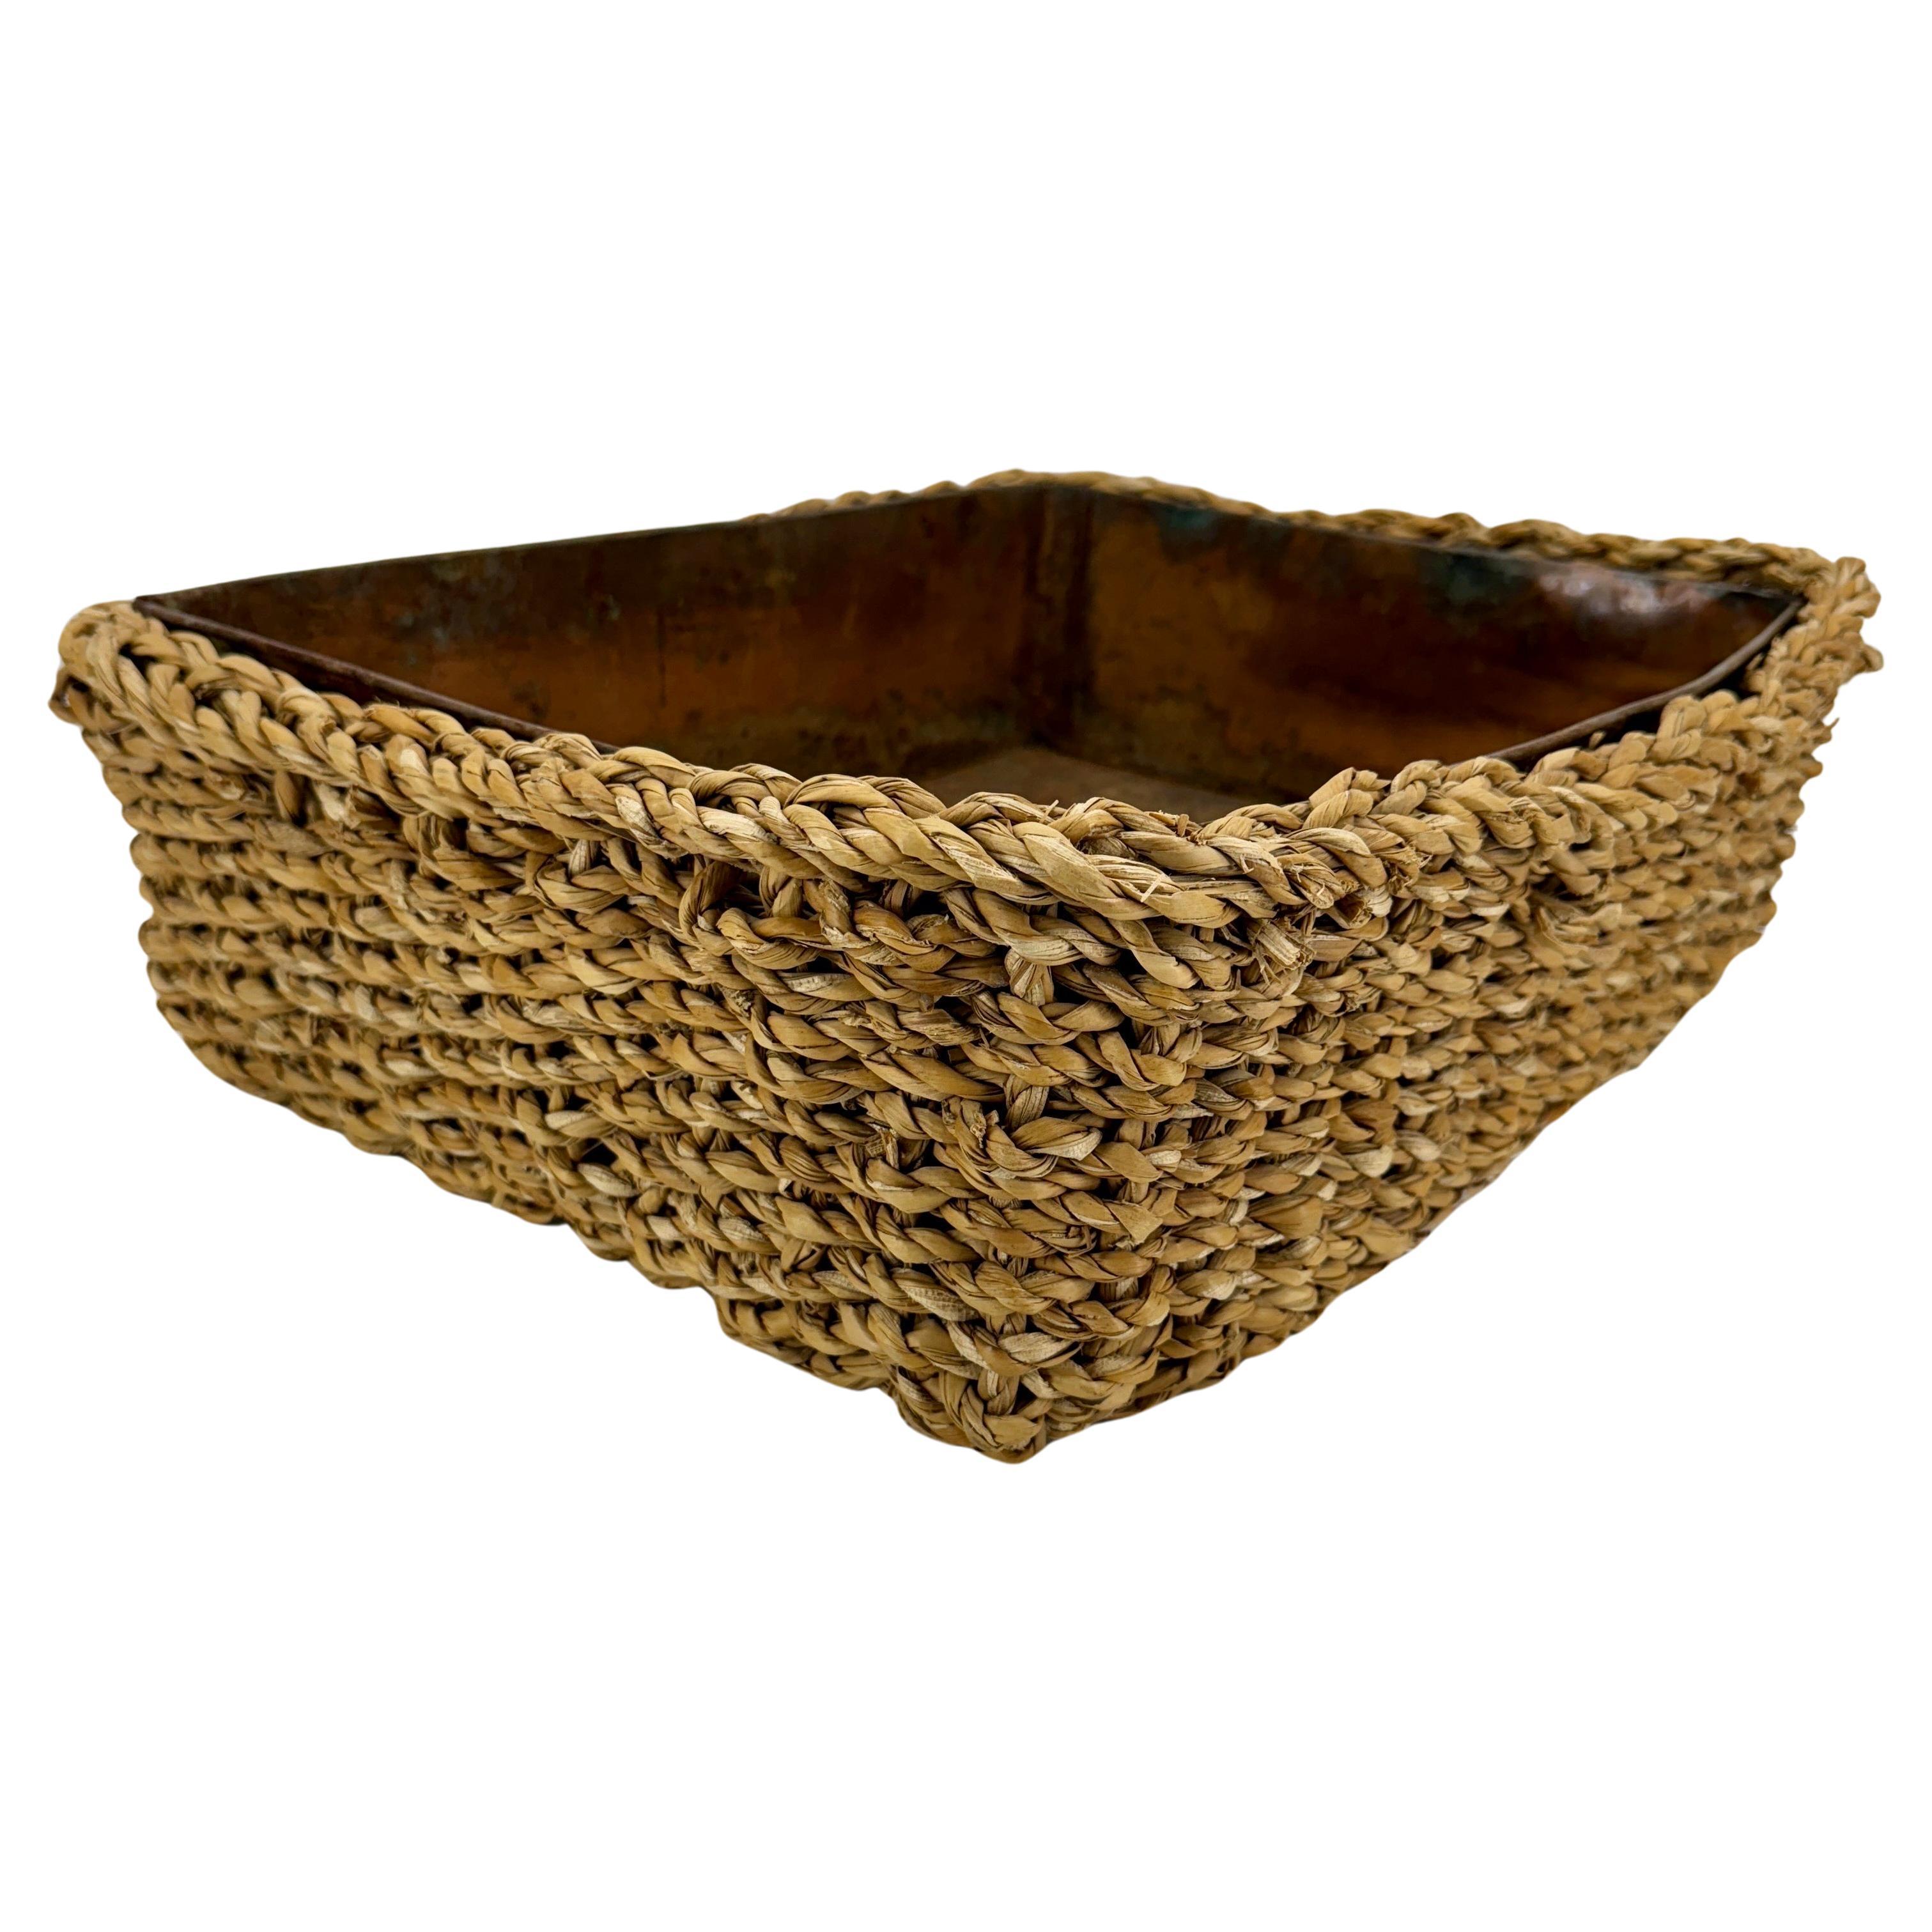 French Provincial Large Rectangular Planter Basket with Rustic Metal Liner, France For Sale